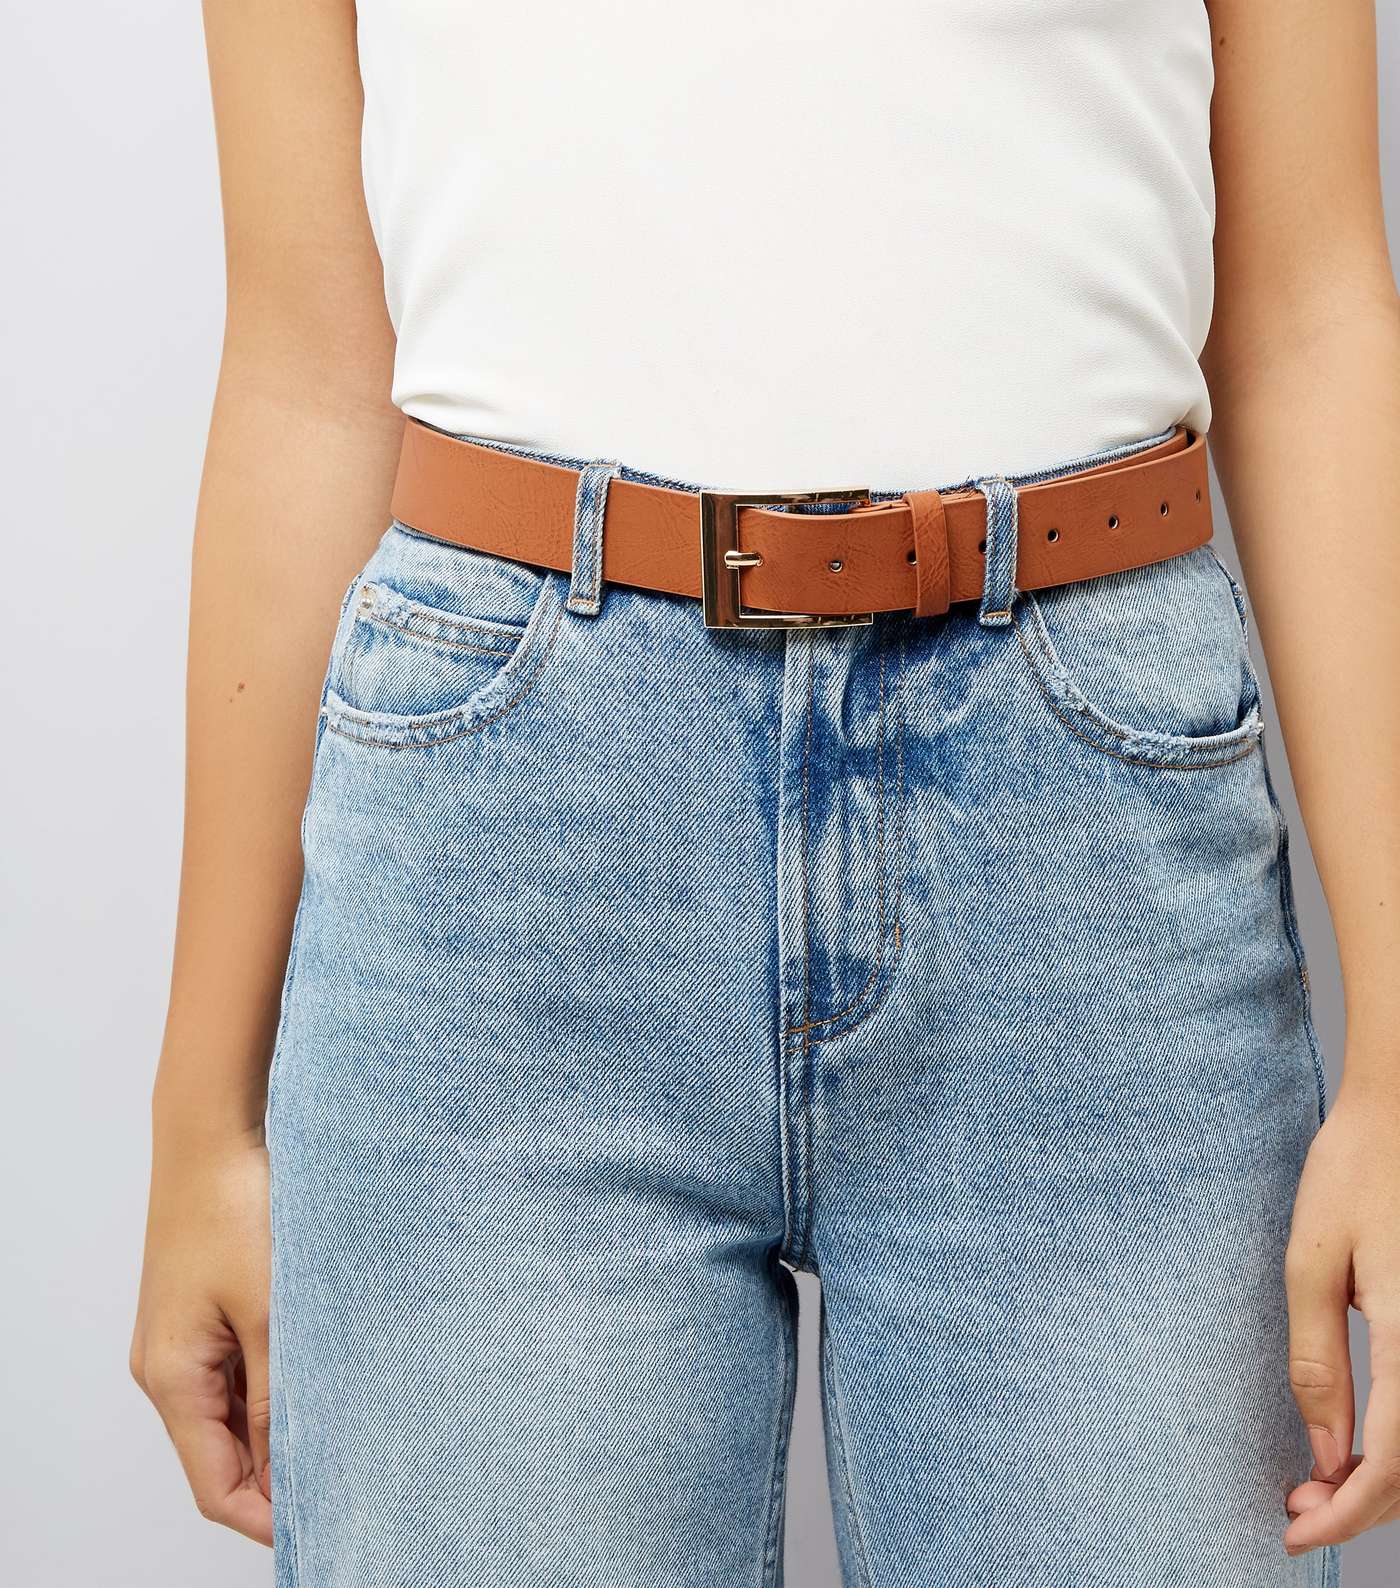 Tan Leather-Look Hip Belt